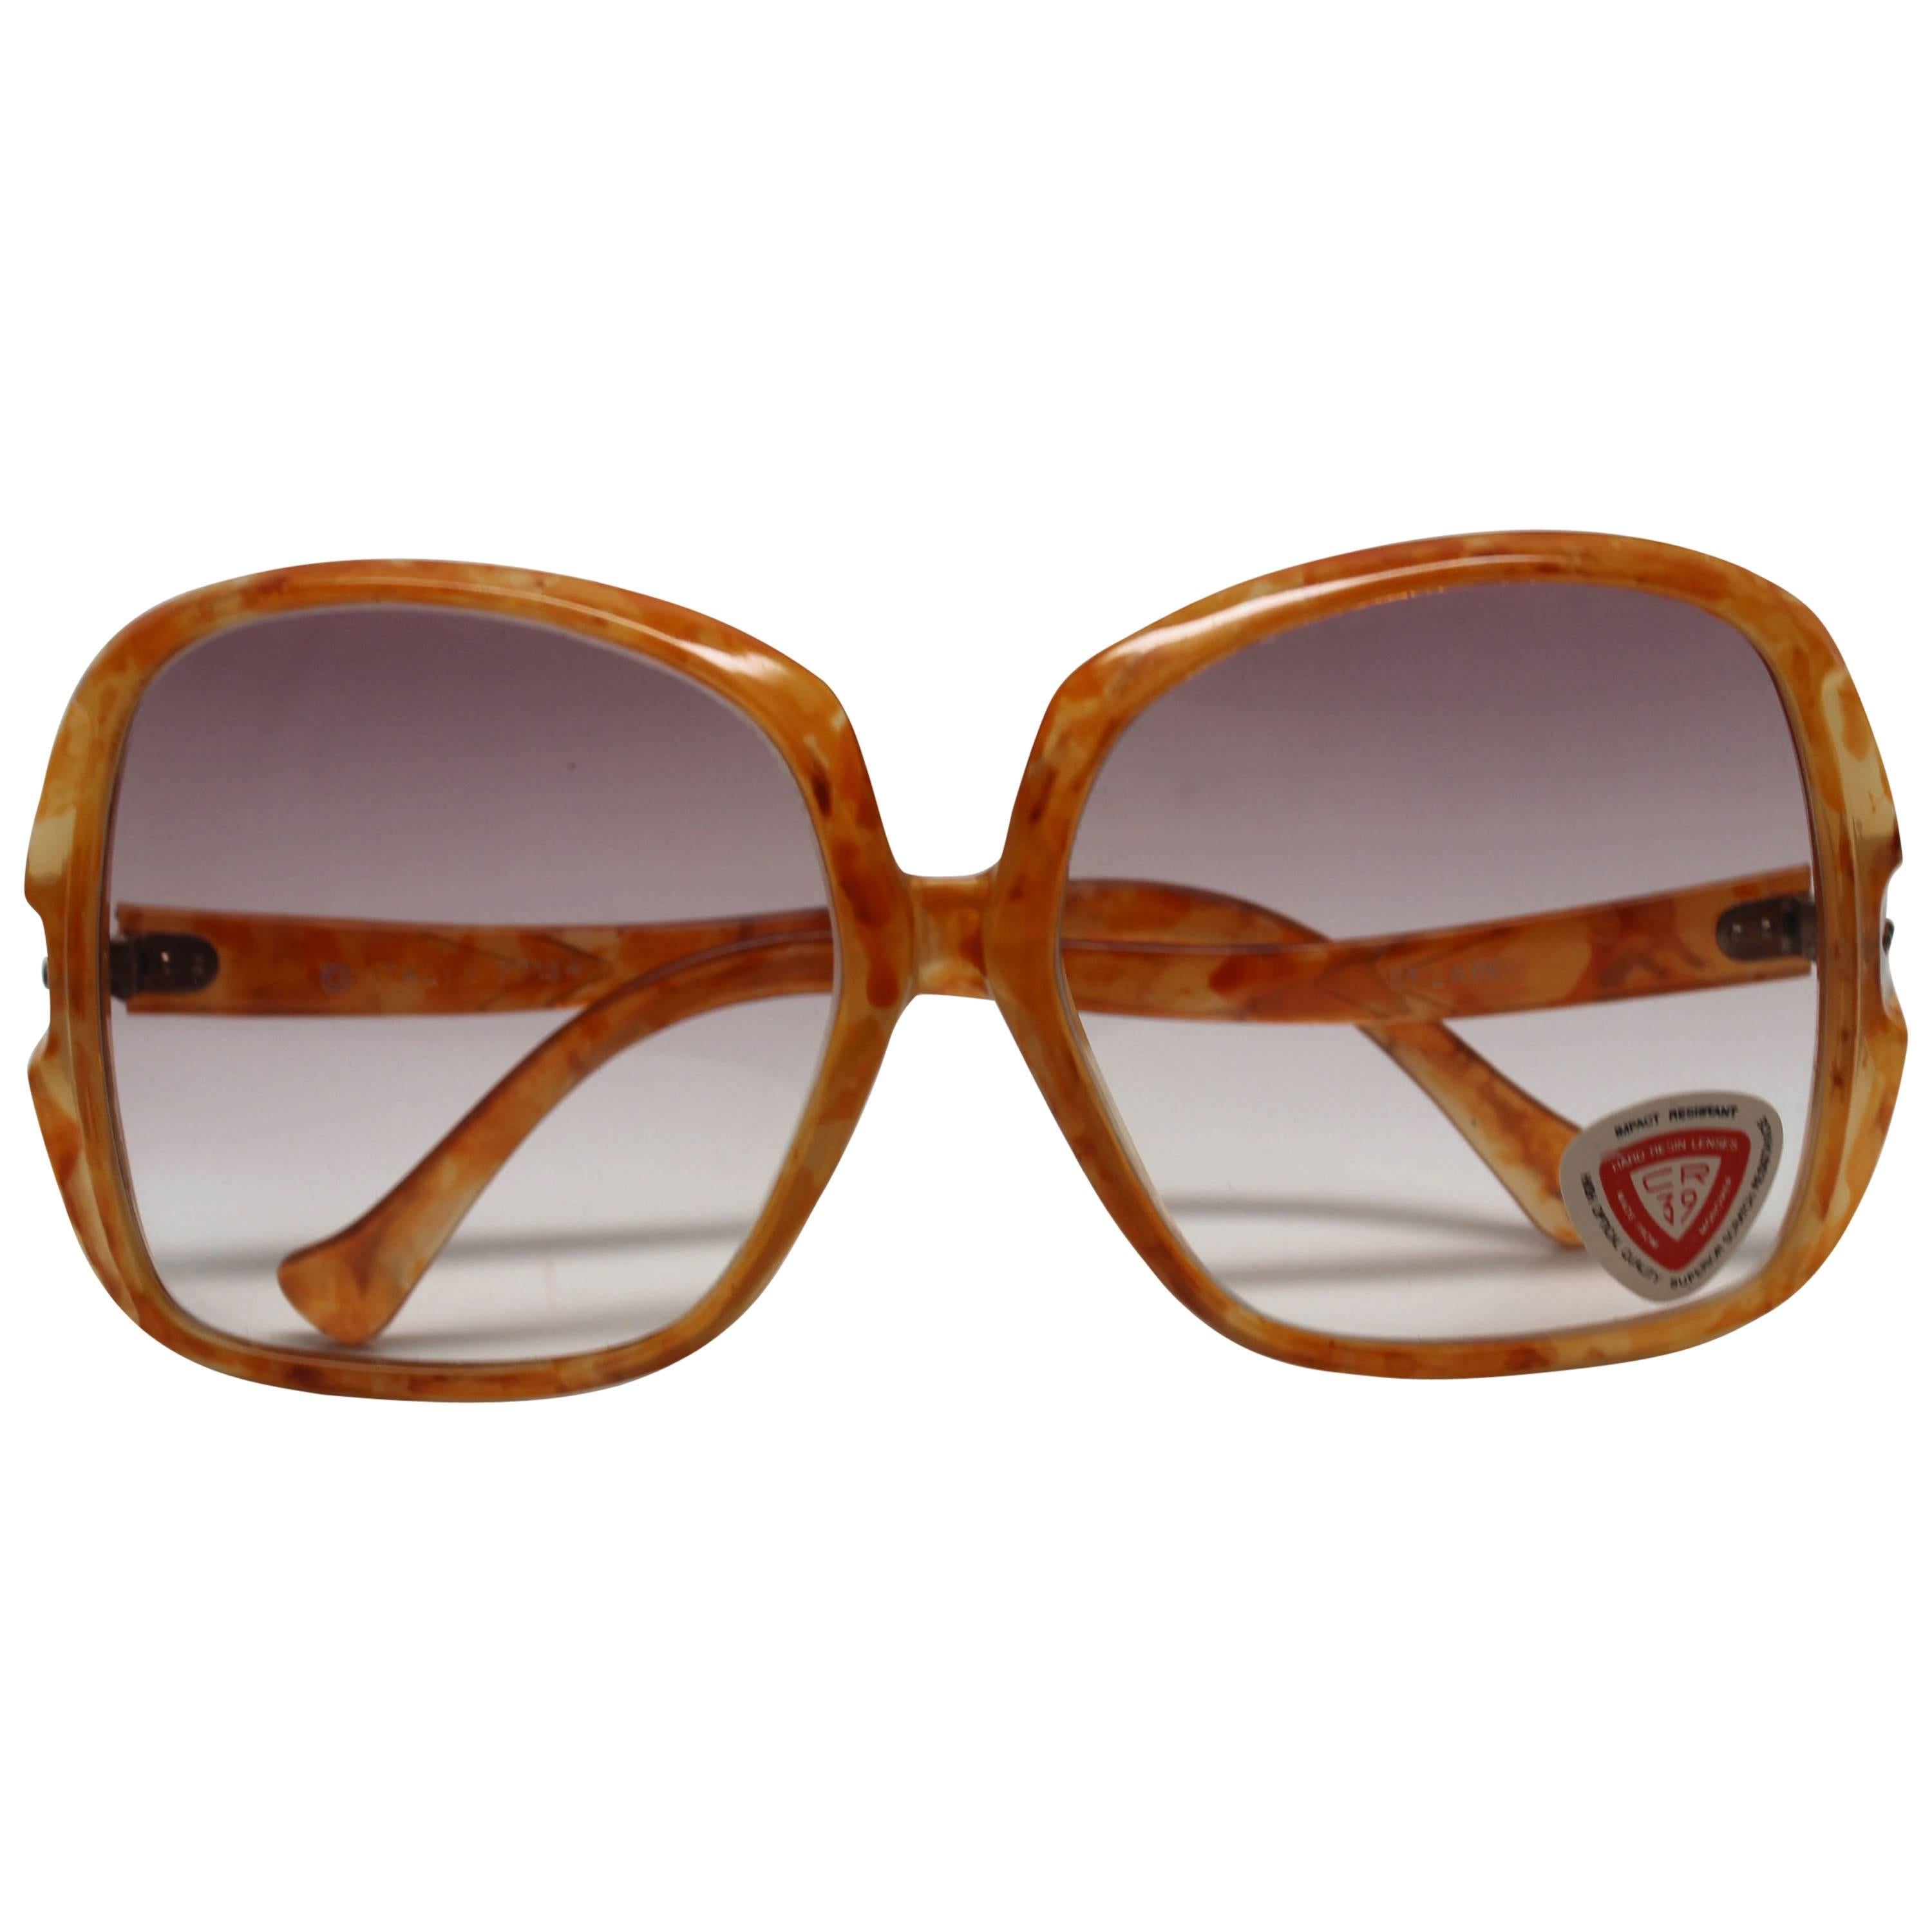 1970s Deadstock Orange Sunglasses Made in Italy For Sale